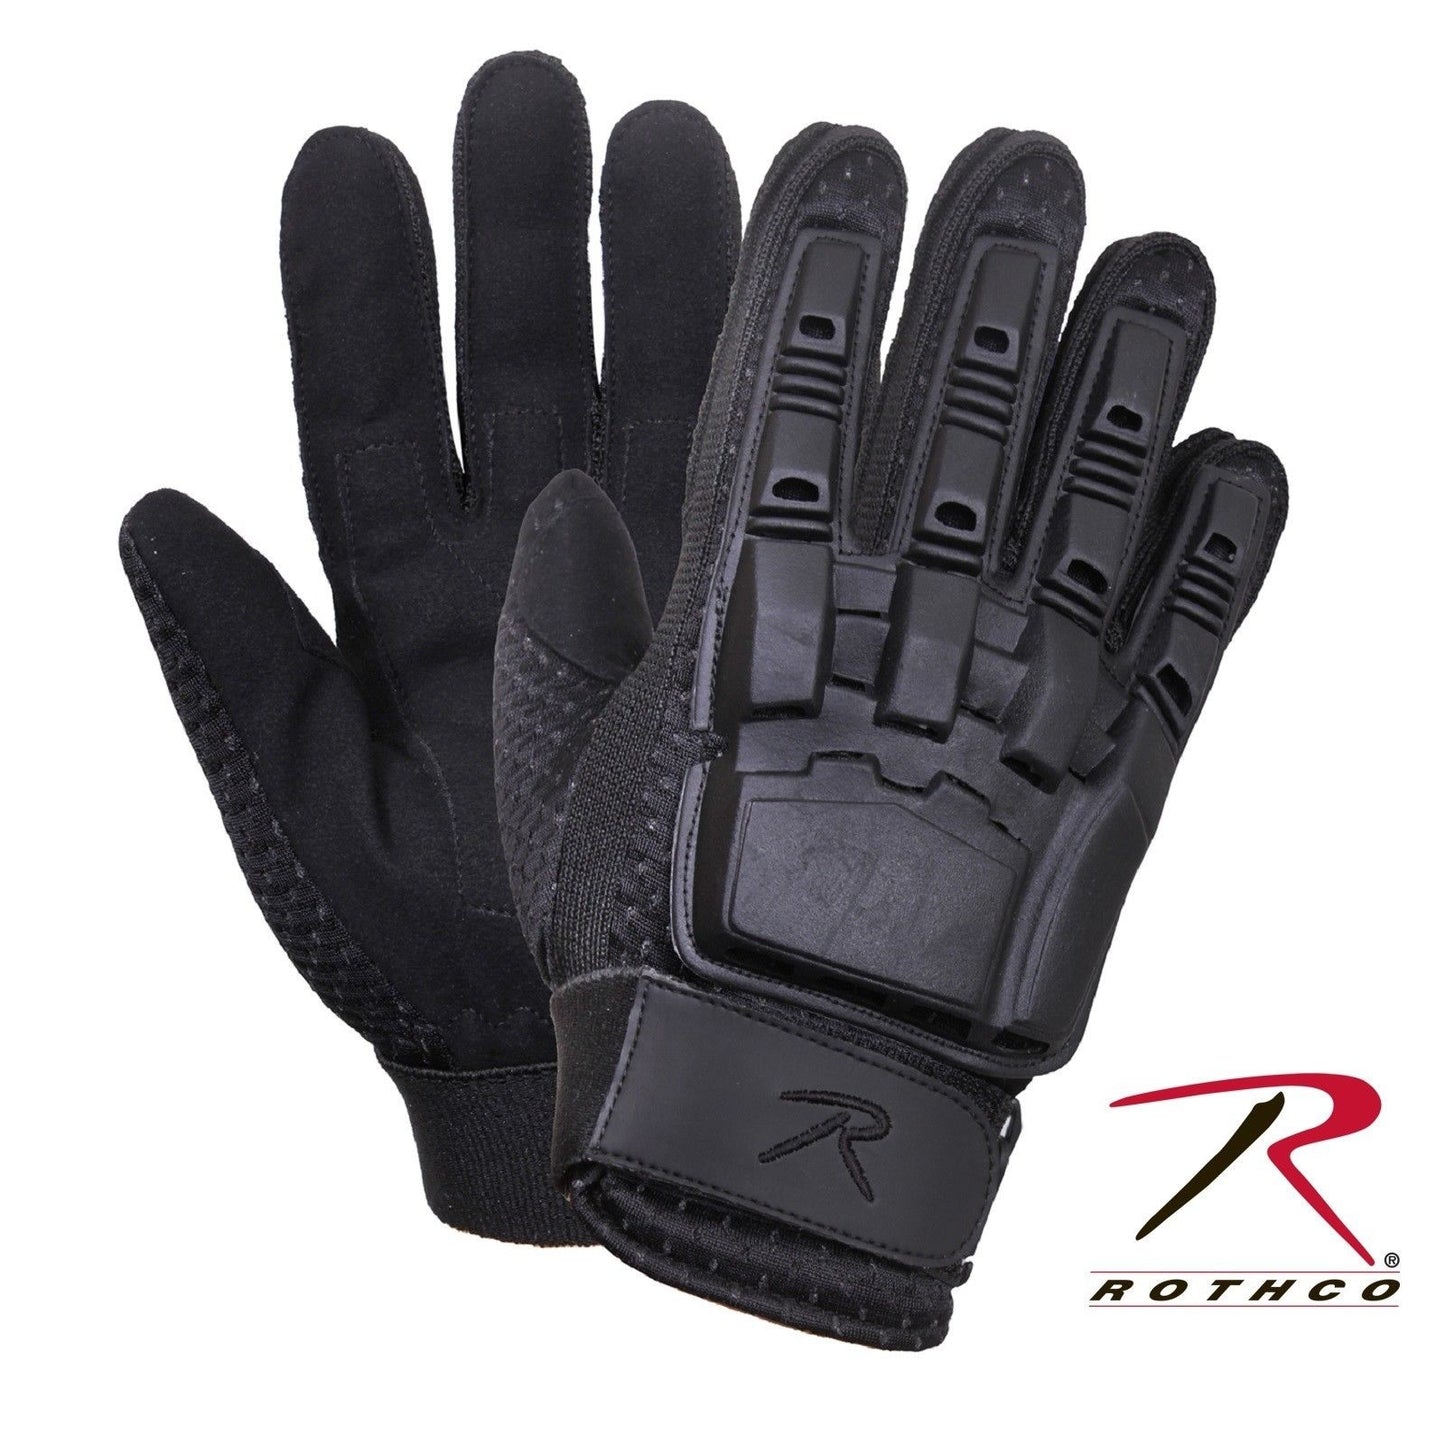 Rothco Hard Back Duty Gloves - Black Tactical Glove